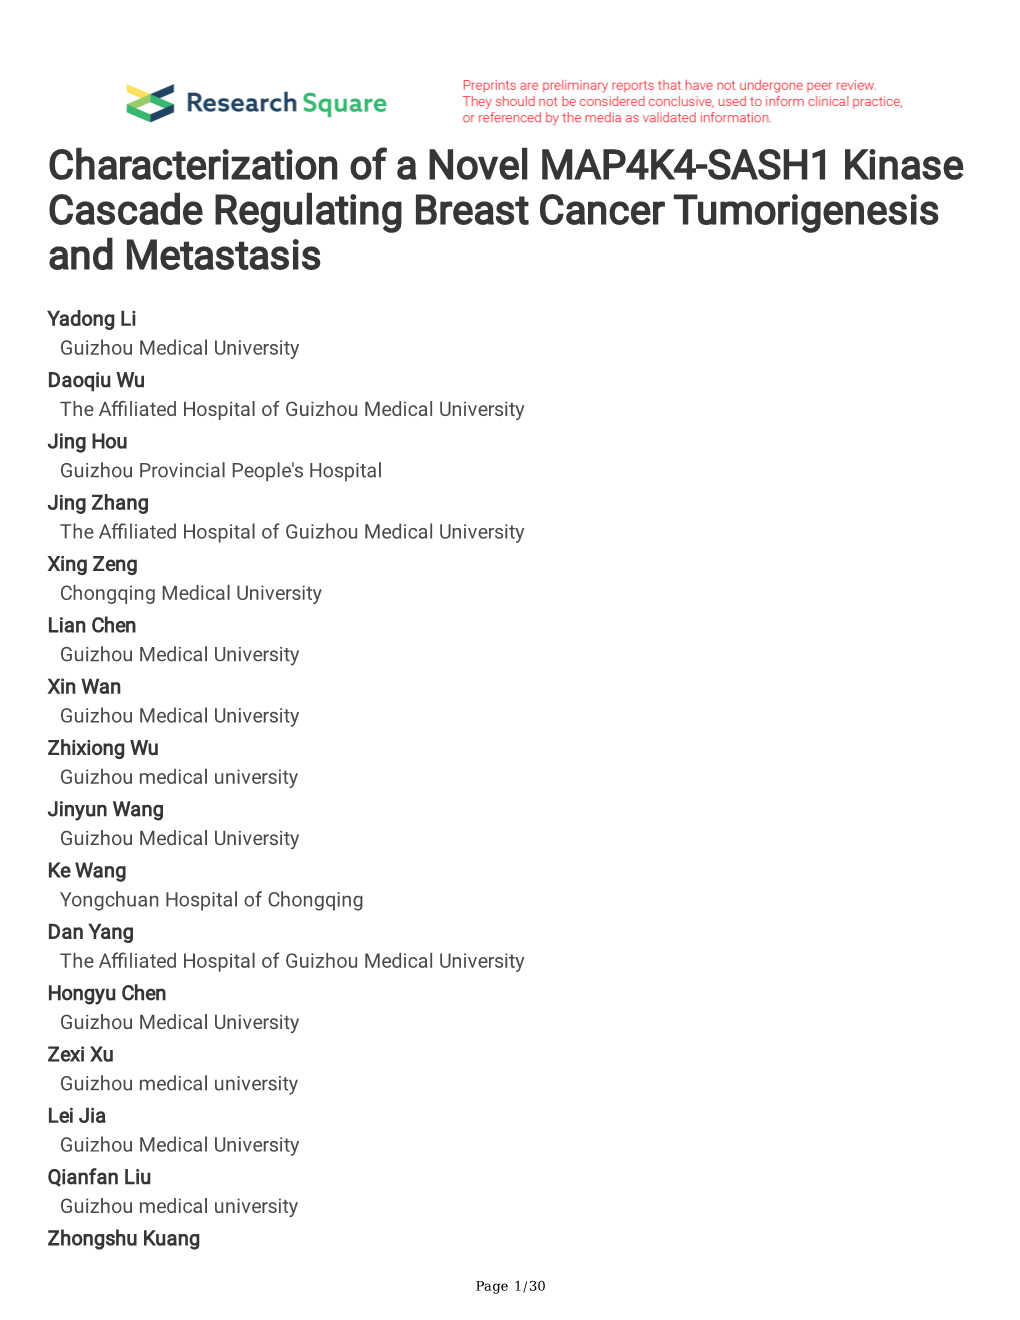 Characterization of a Novel MAP4K4-SASH1 Kinase Cascade Regulating Breast Cancer Tumorigenesis and Metastasis